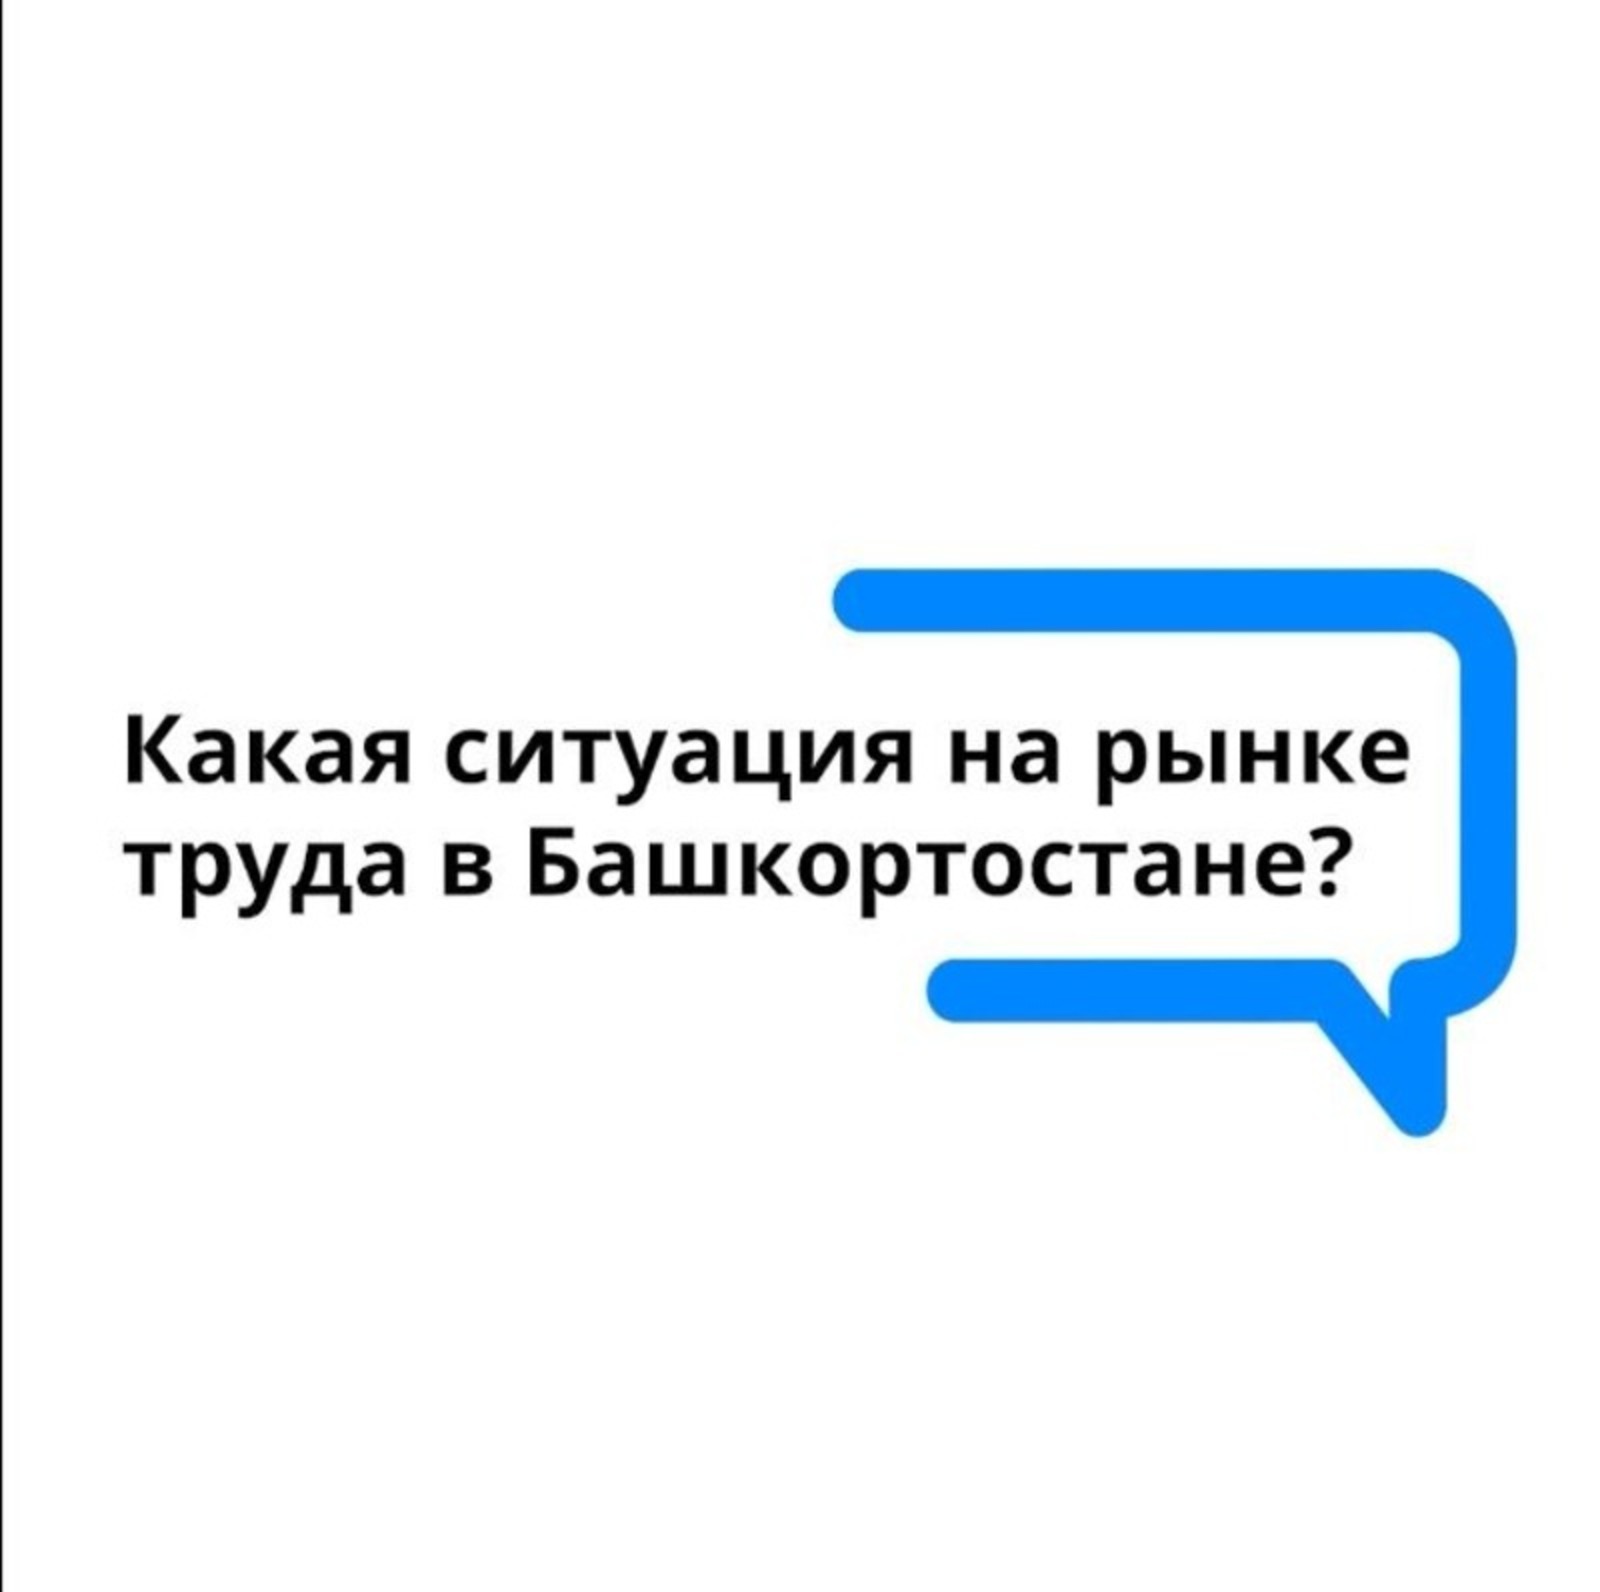 Какая ситуация на рынке труда Республики Башкортостан?